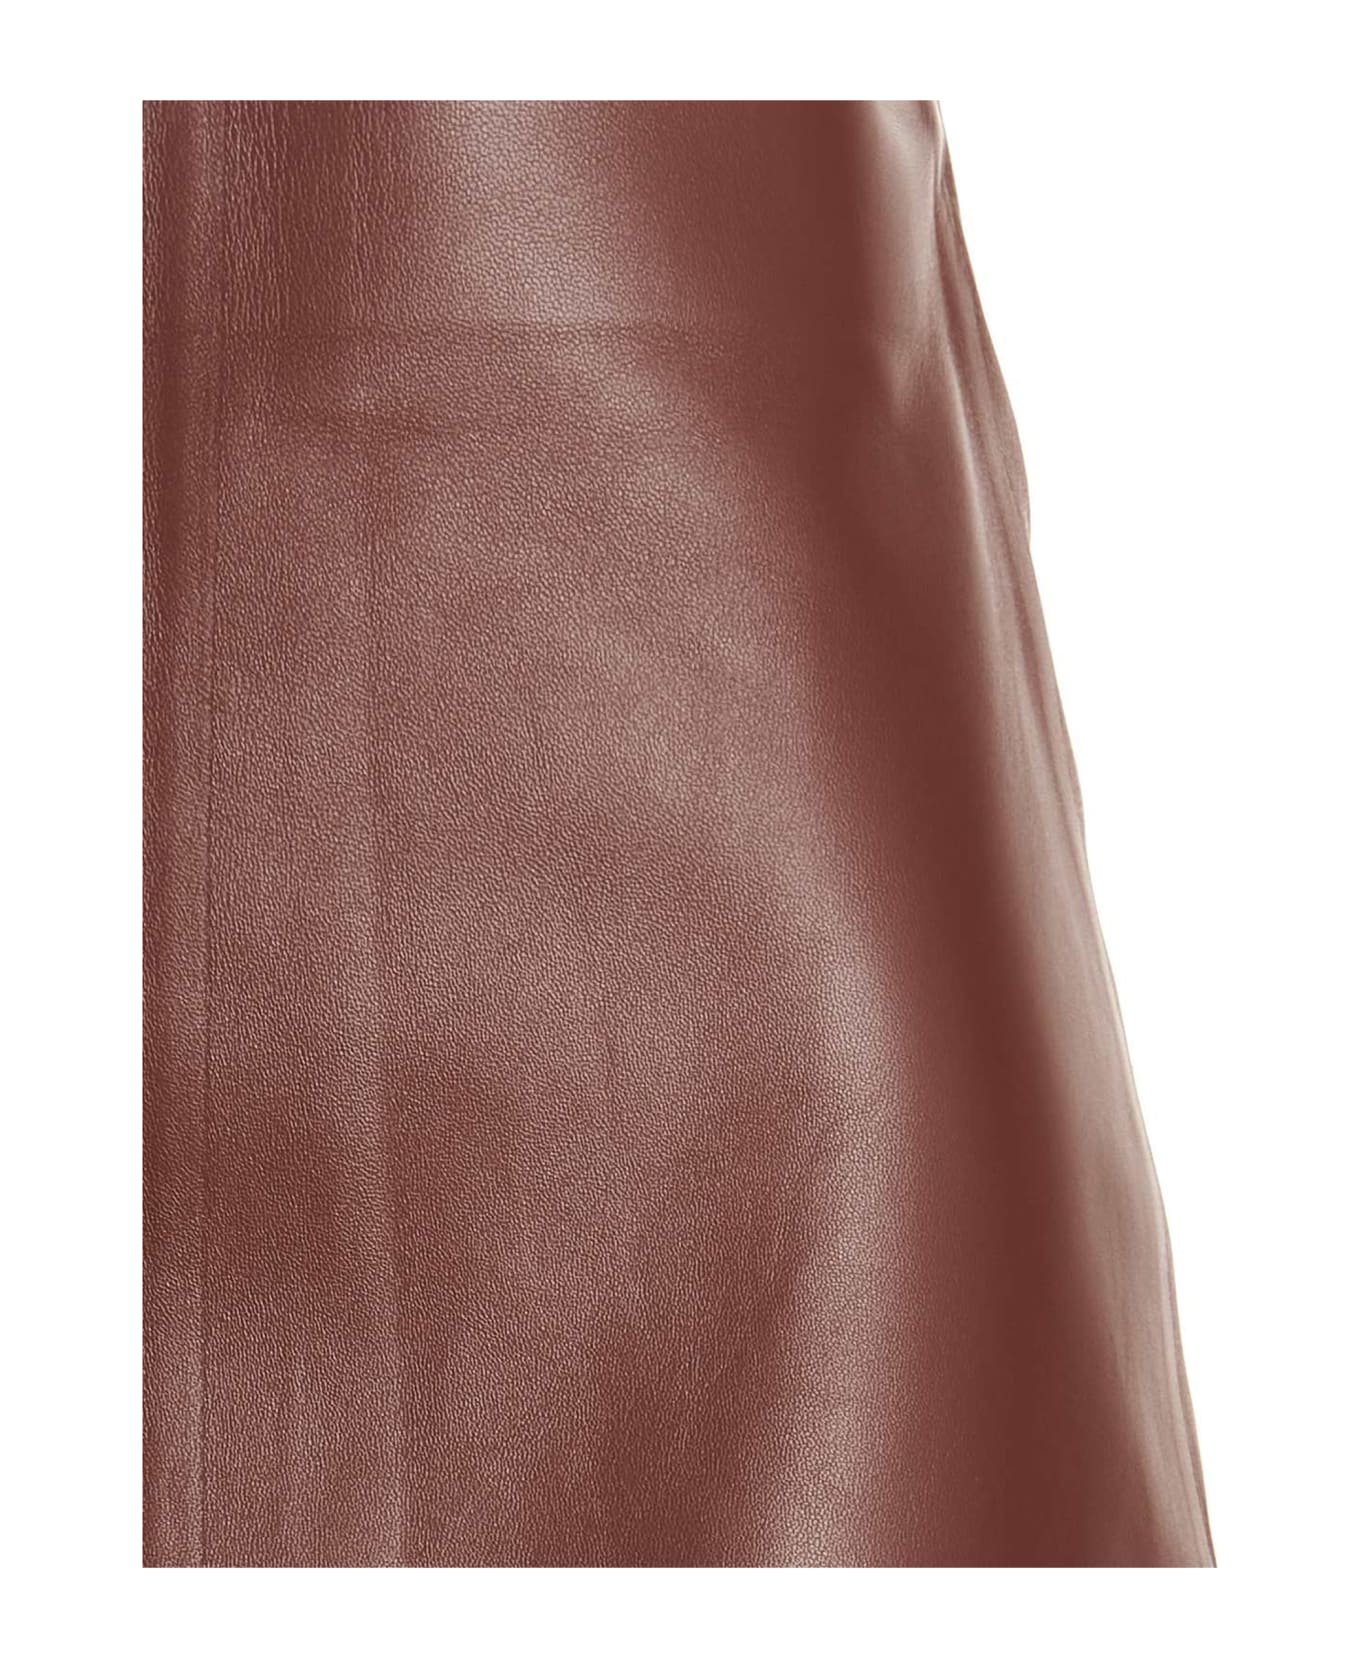 Chloé Leather Split Skirt - Brown